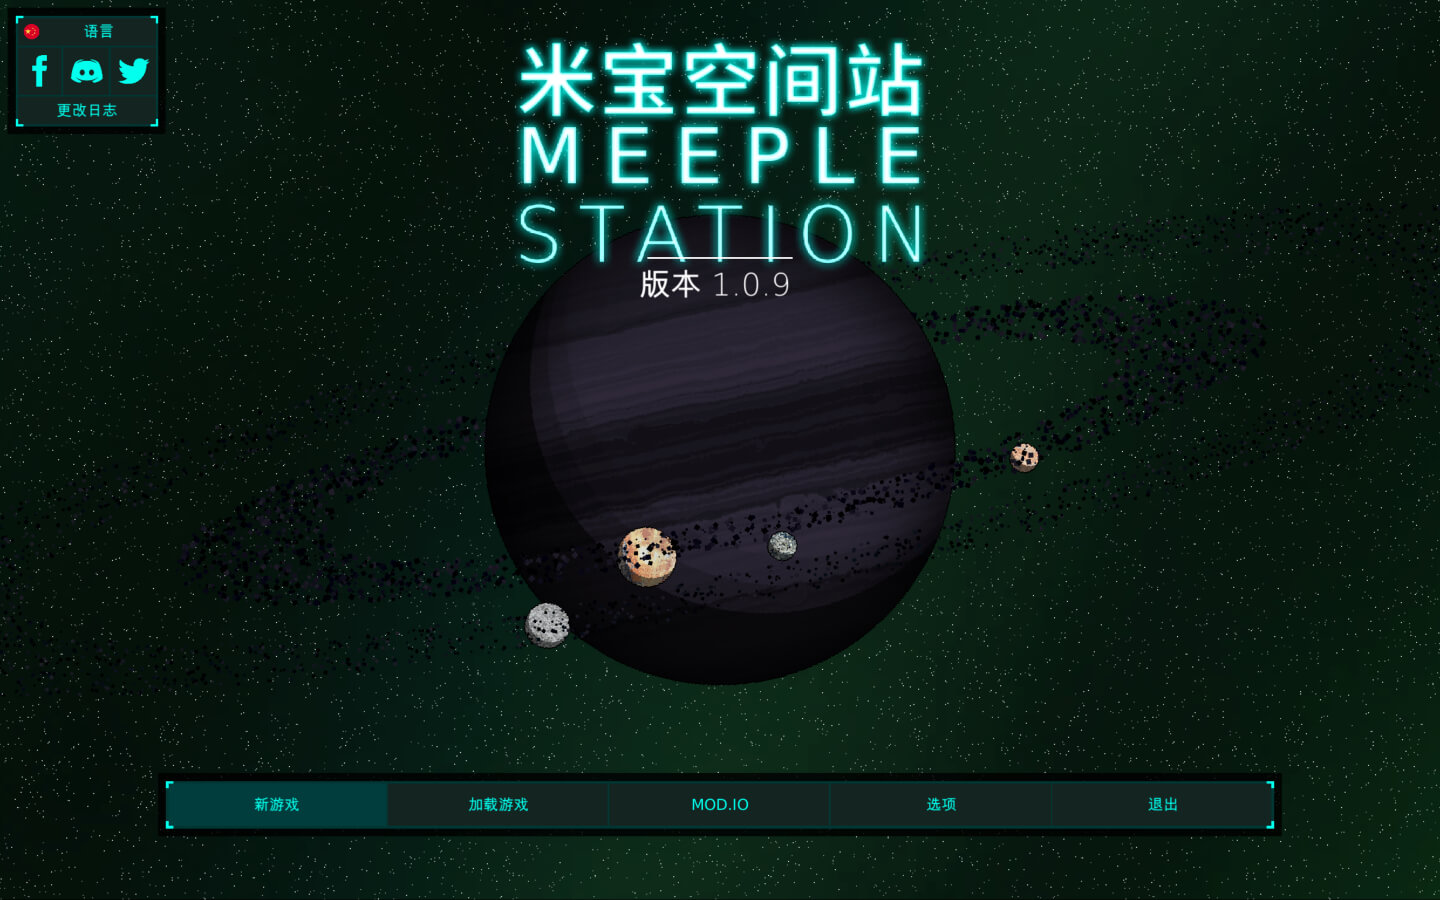 米宝空间站 for Mac Meeple Station v1.0.9 中文原生版 苹果电脑